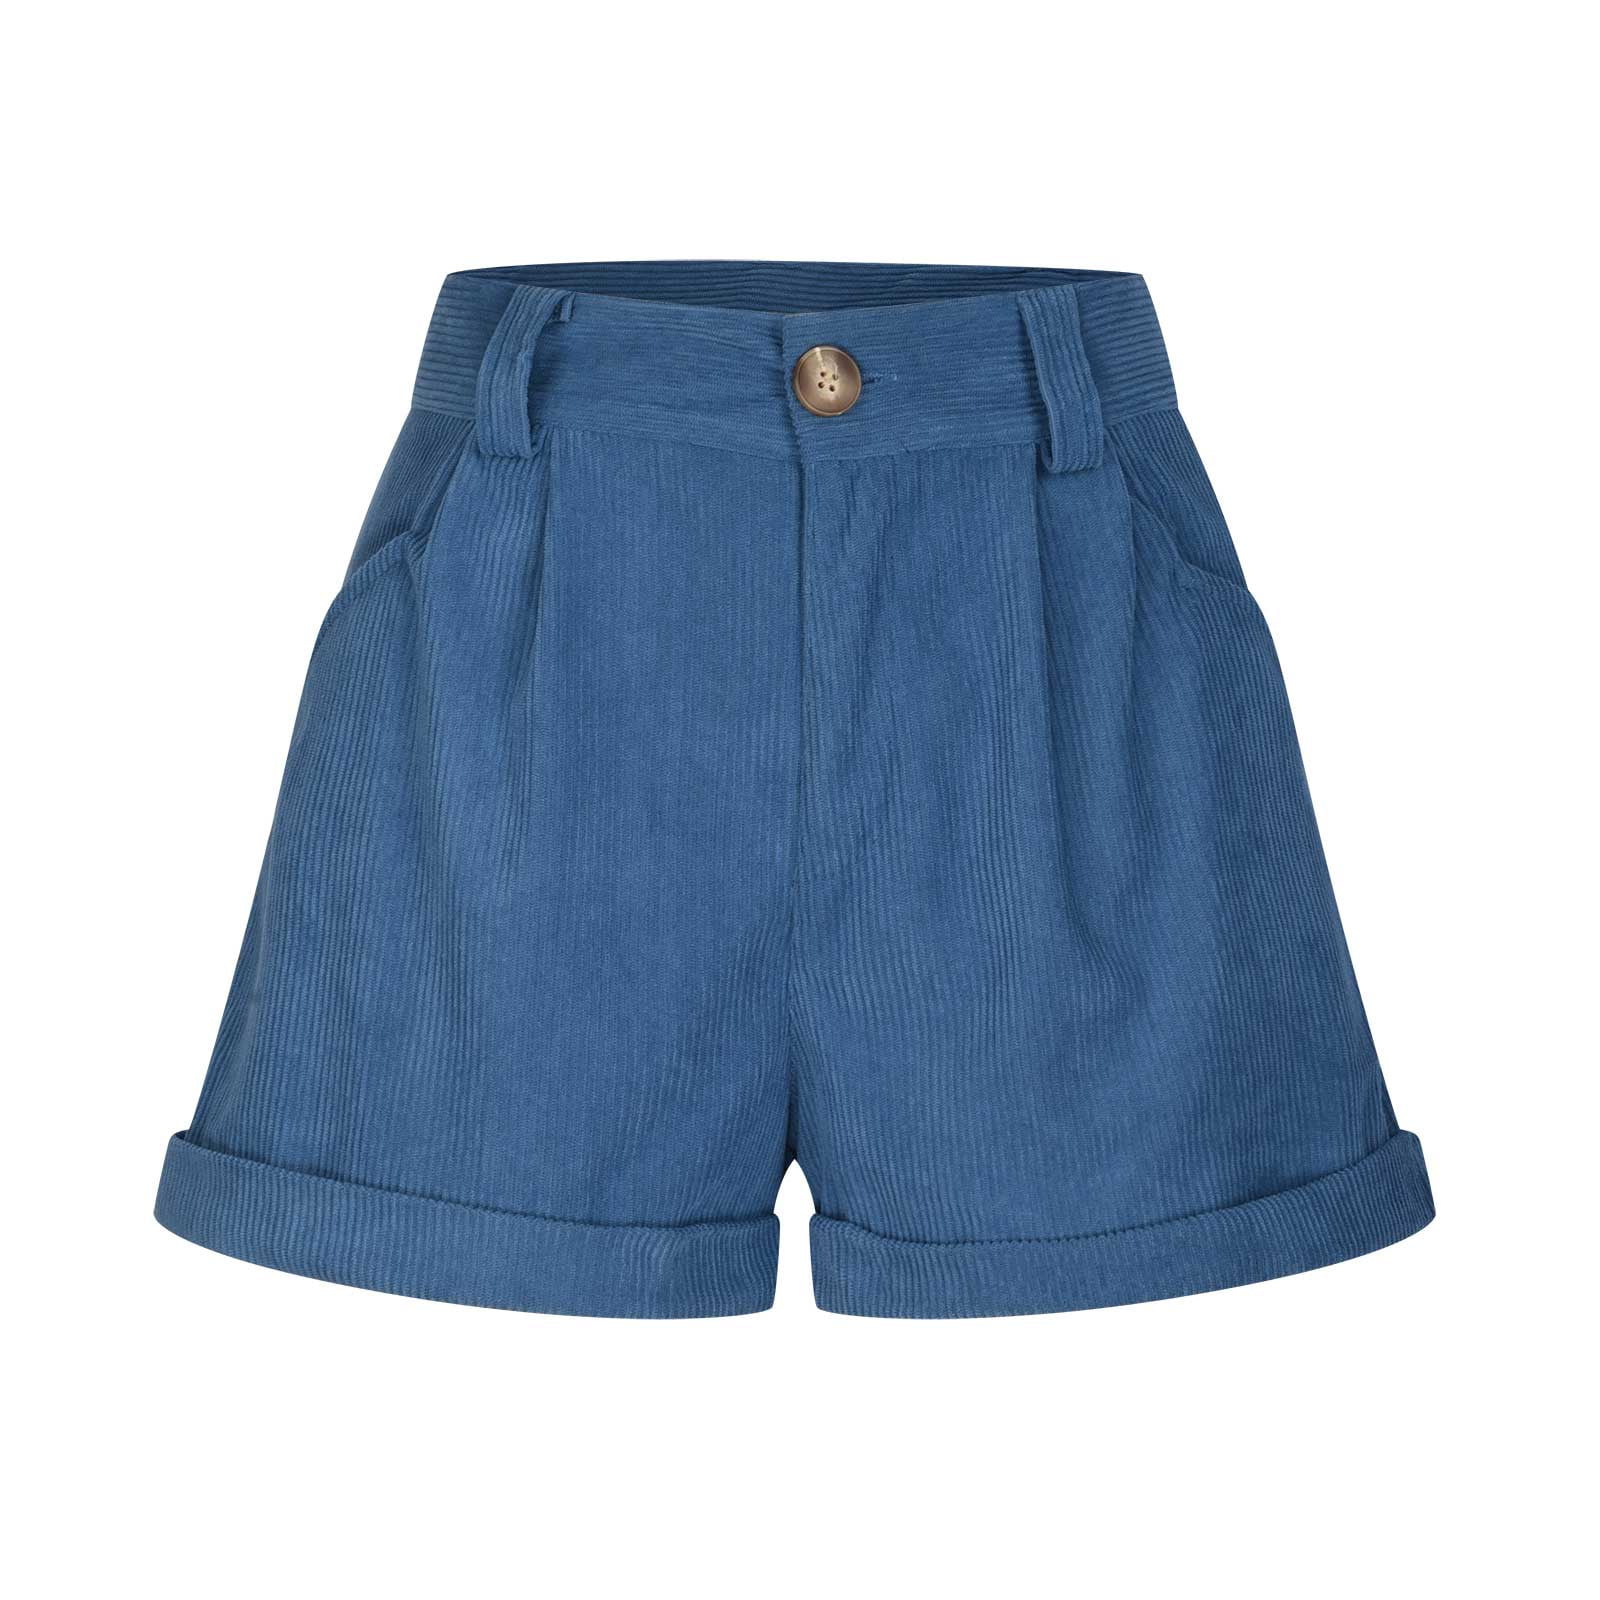 RQYYD Reduced Womens Summer Shorts Mid-Waist Cuffed Hem Corduroy Shorts  Casual Solid Wide Leg Short Pants with Pockets Khaki S 